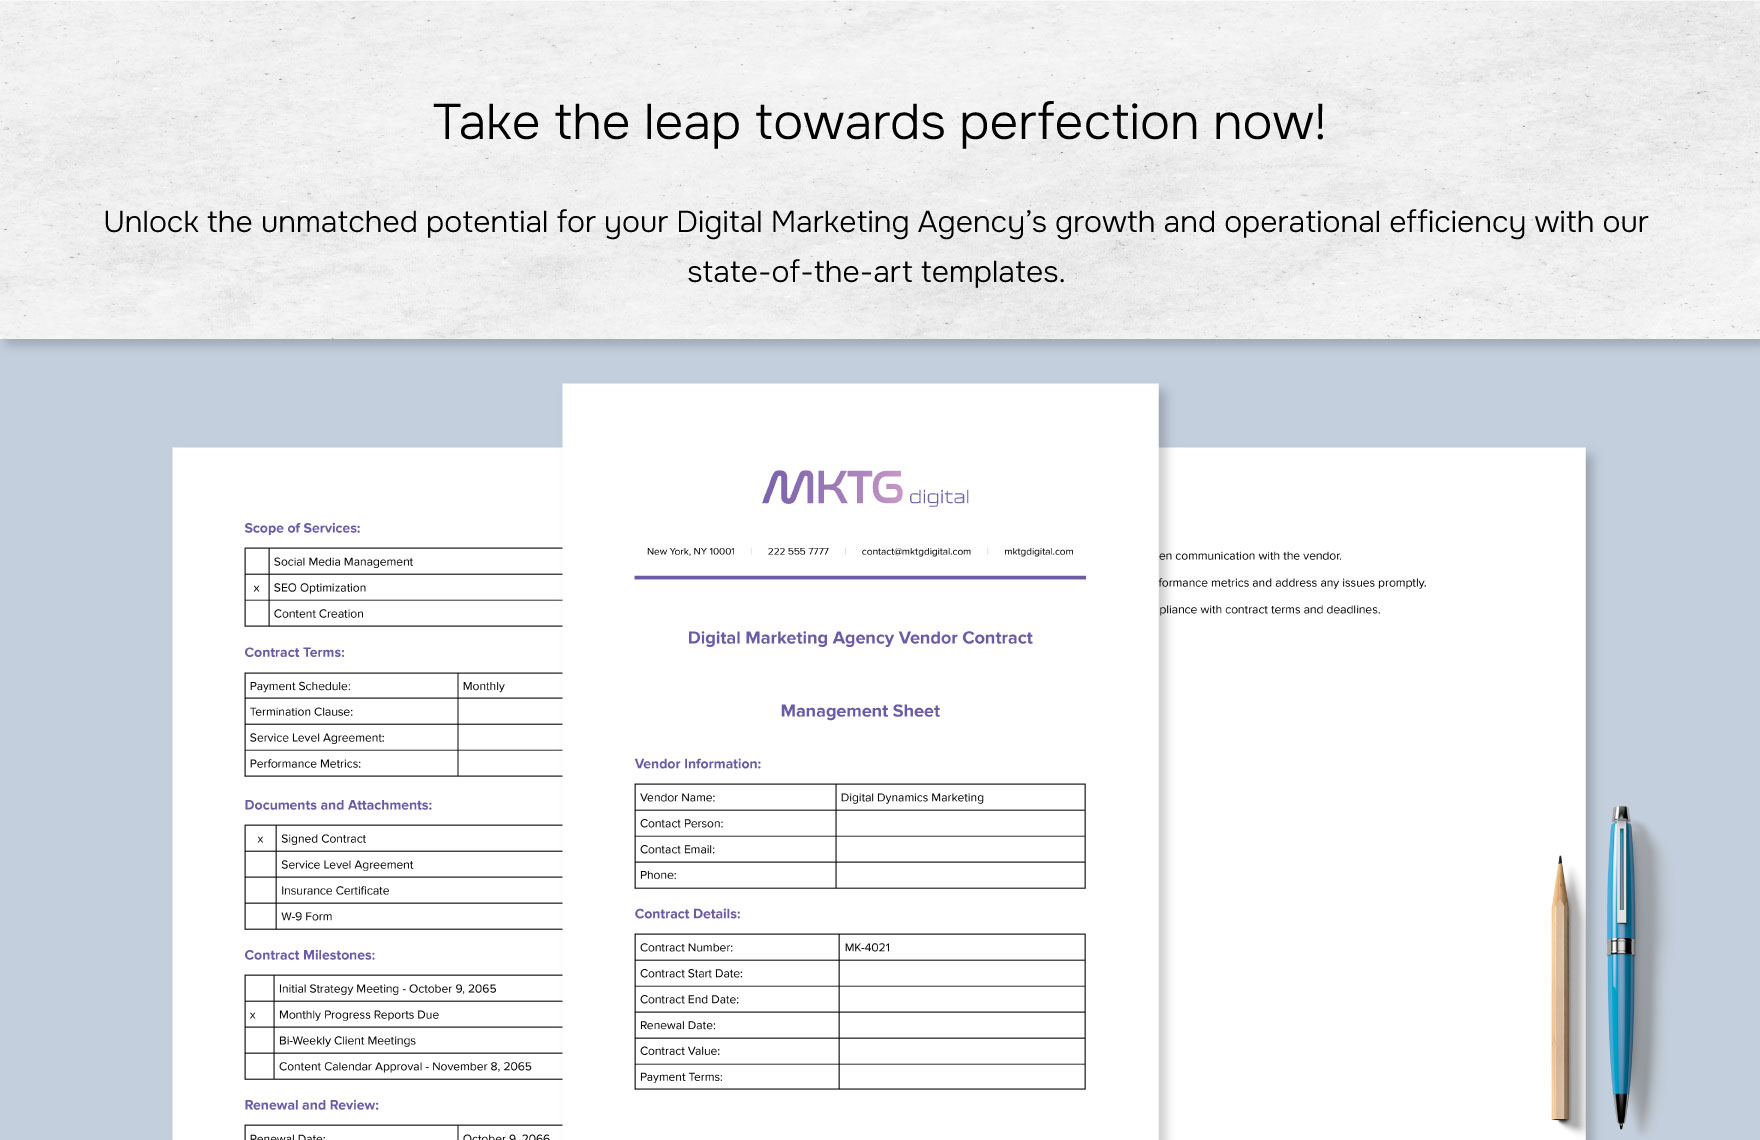 Digital Marketing Agency Vendor Contract Management Sheet Template